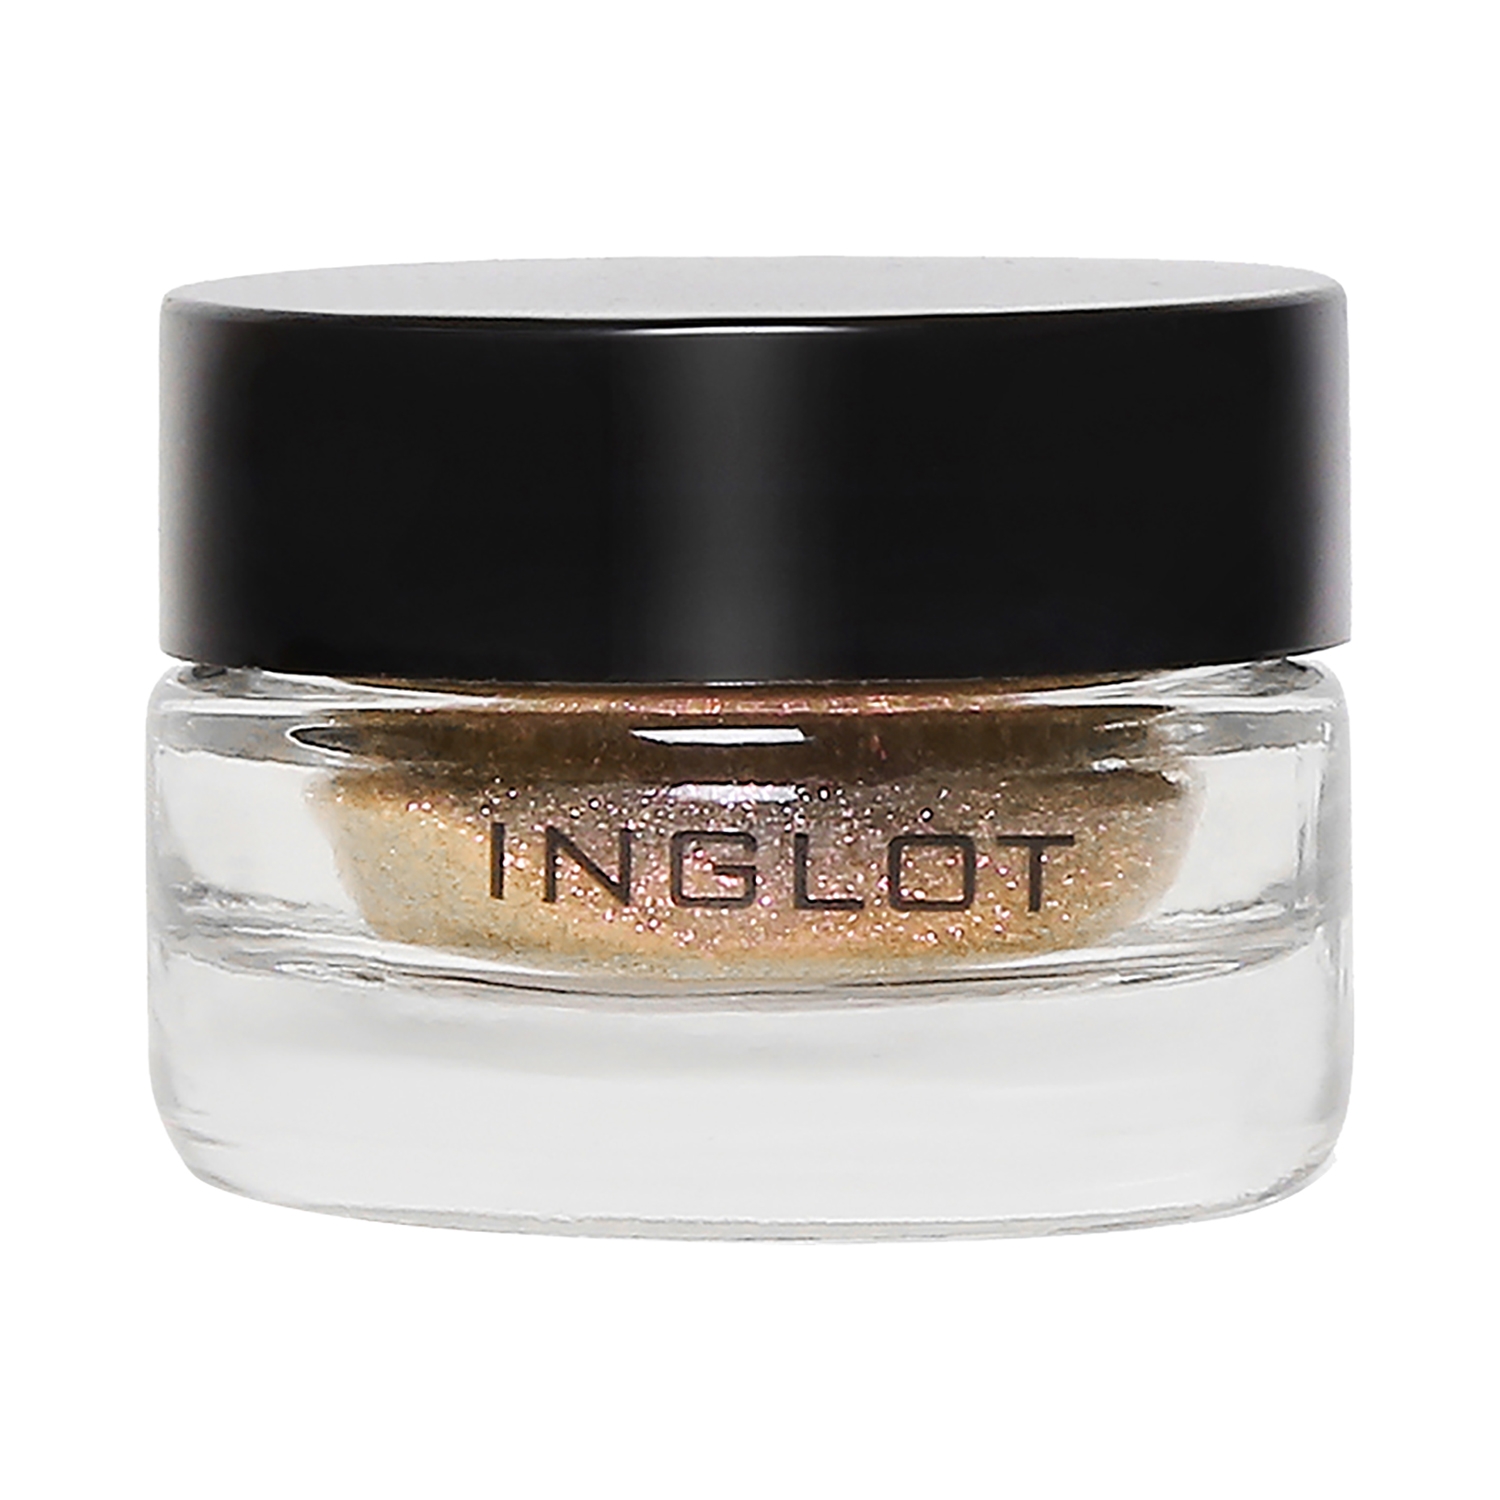 INGLOT | INGLOT Body Sparkles 48 (1g)